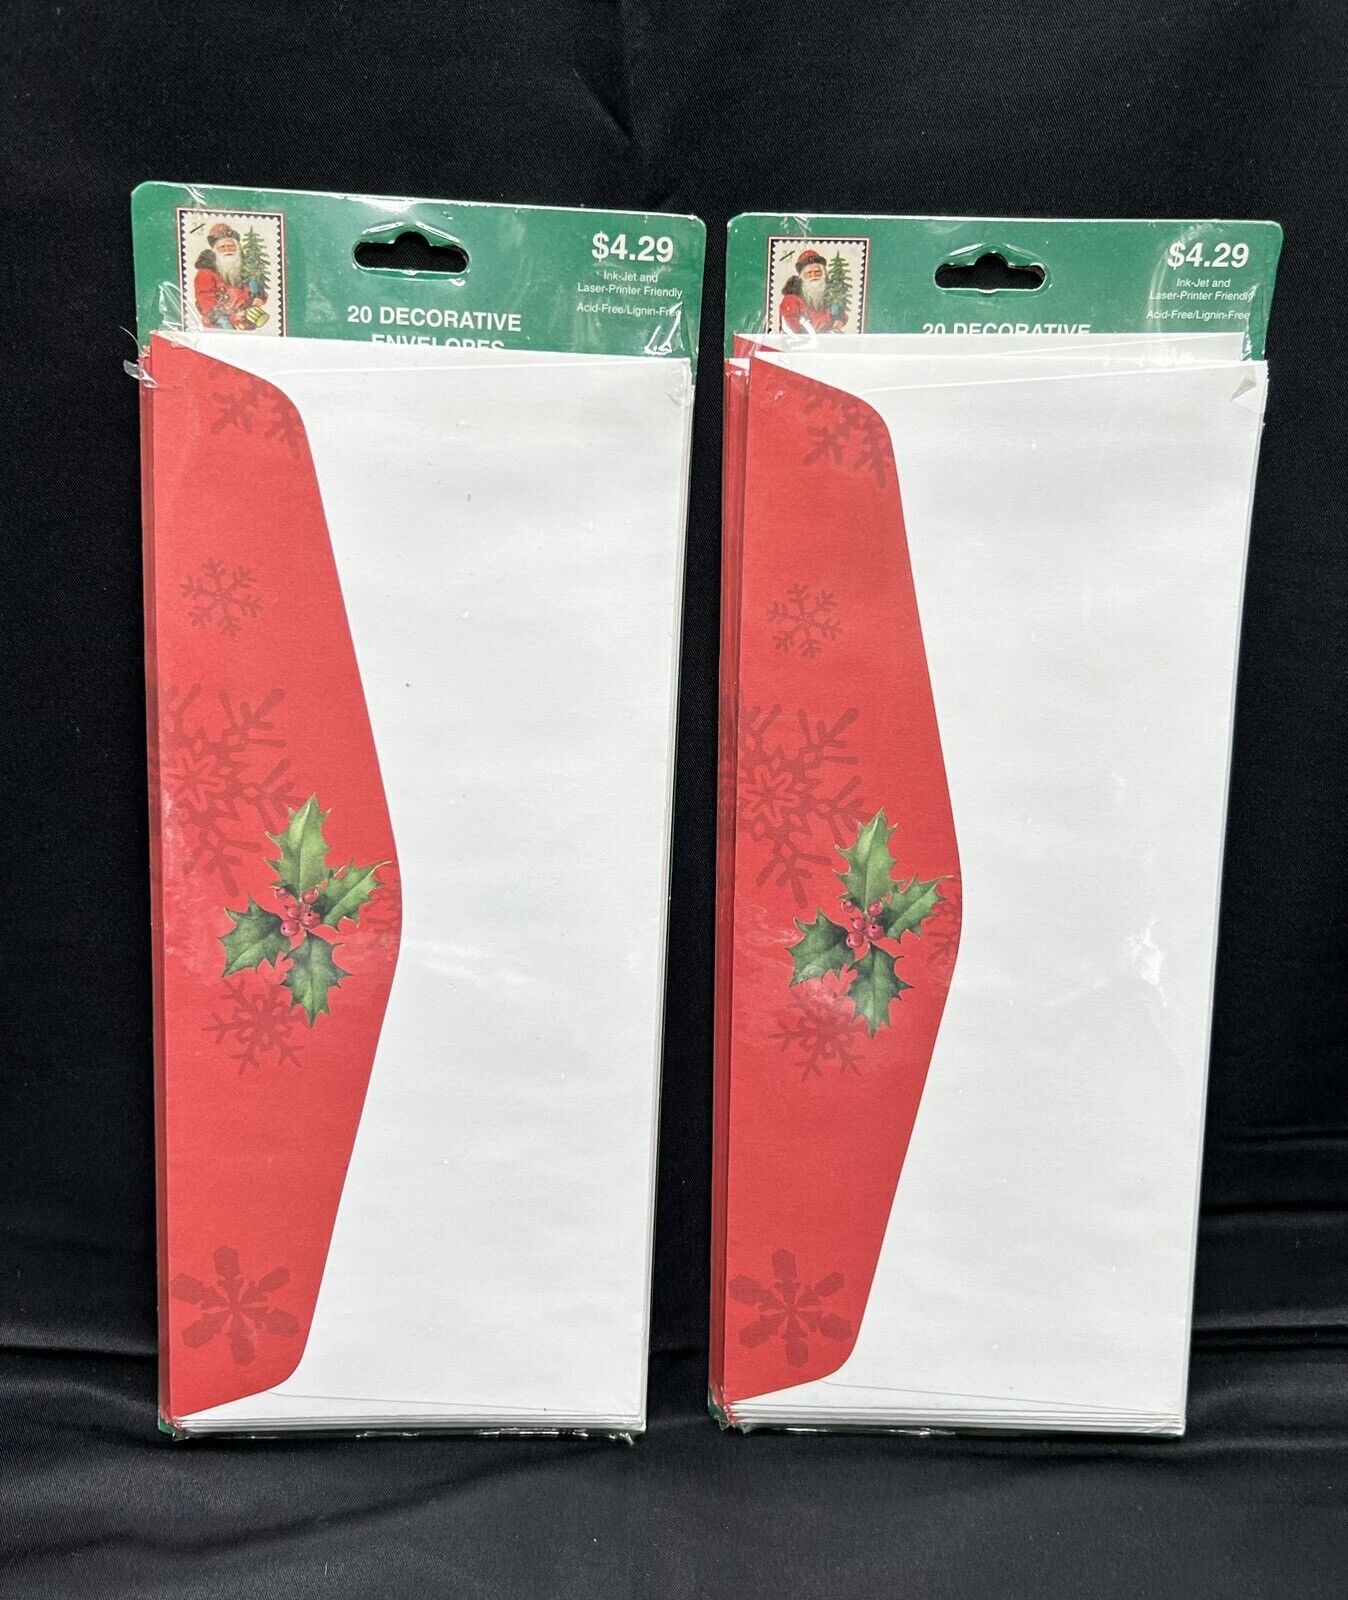 Vintage Hallmark Envelope Lot- 2 Pks of 20 Decorative Holly Envelopes (2001)